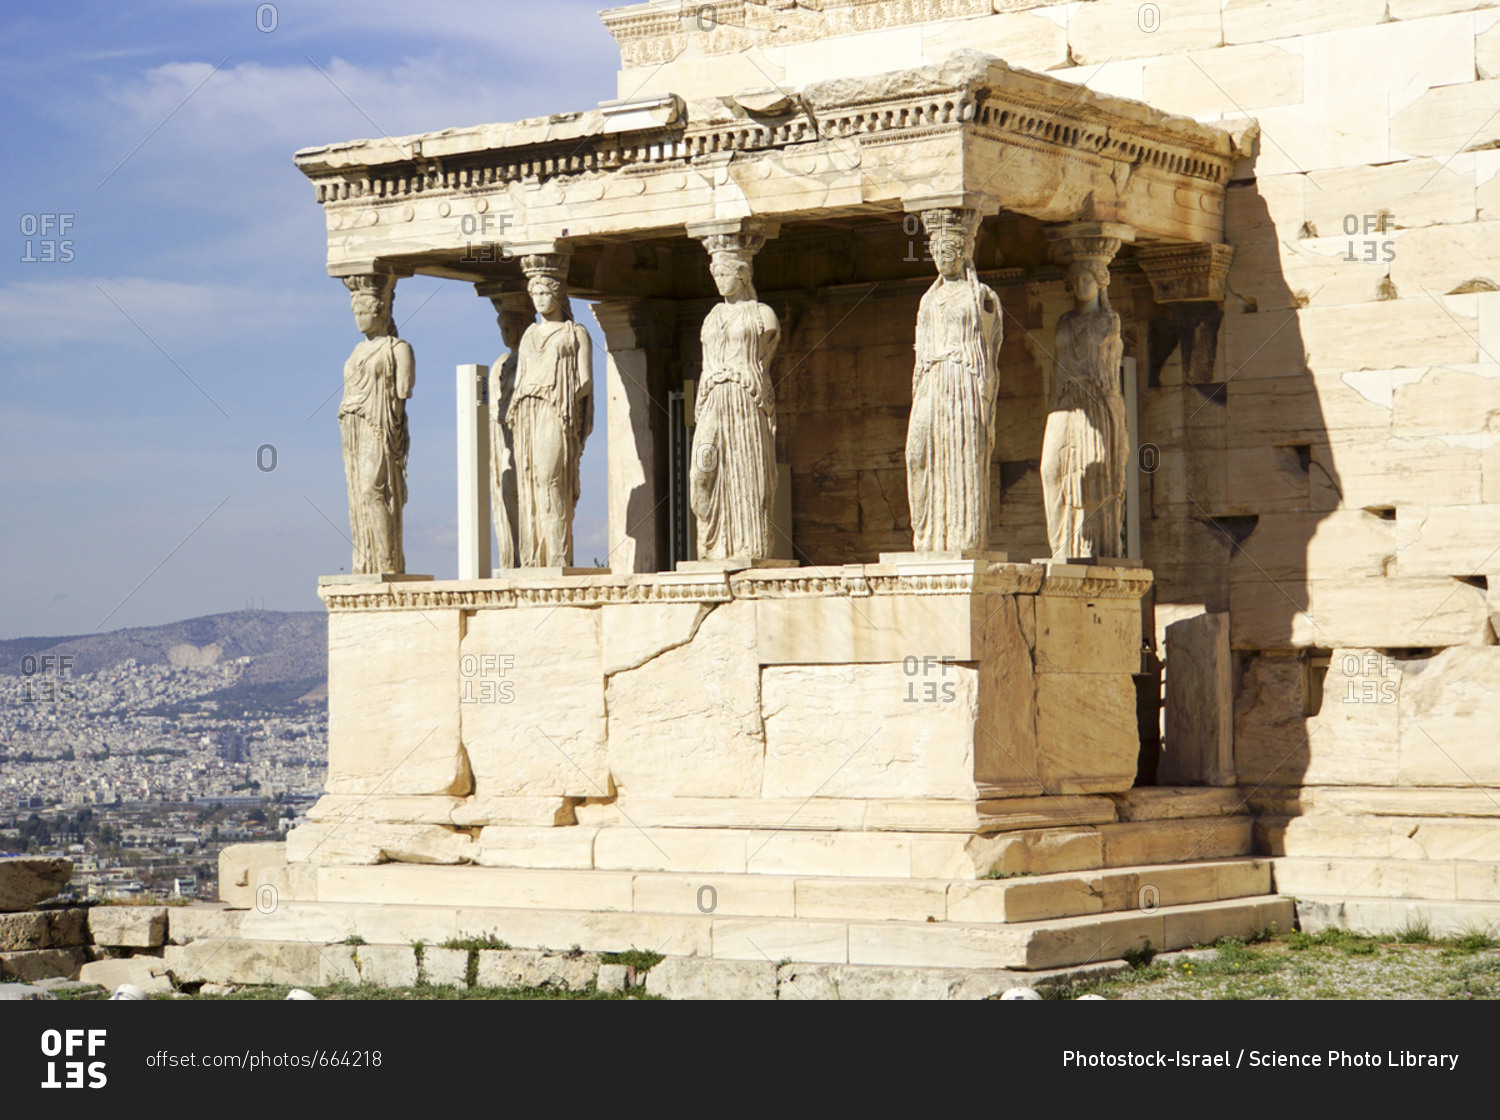 Erechtheion, Acropolis, Athens, Greece